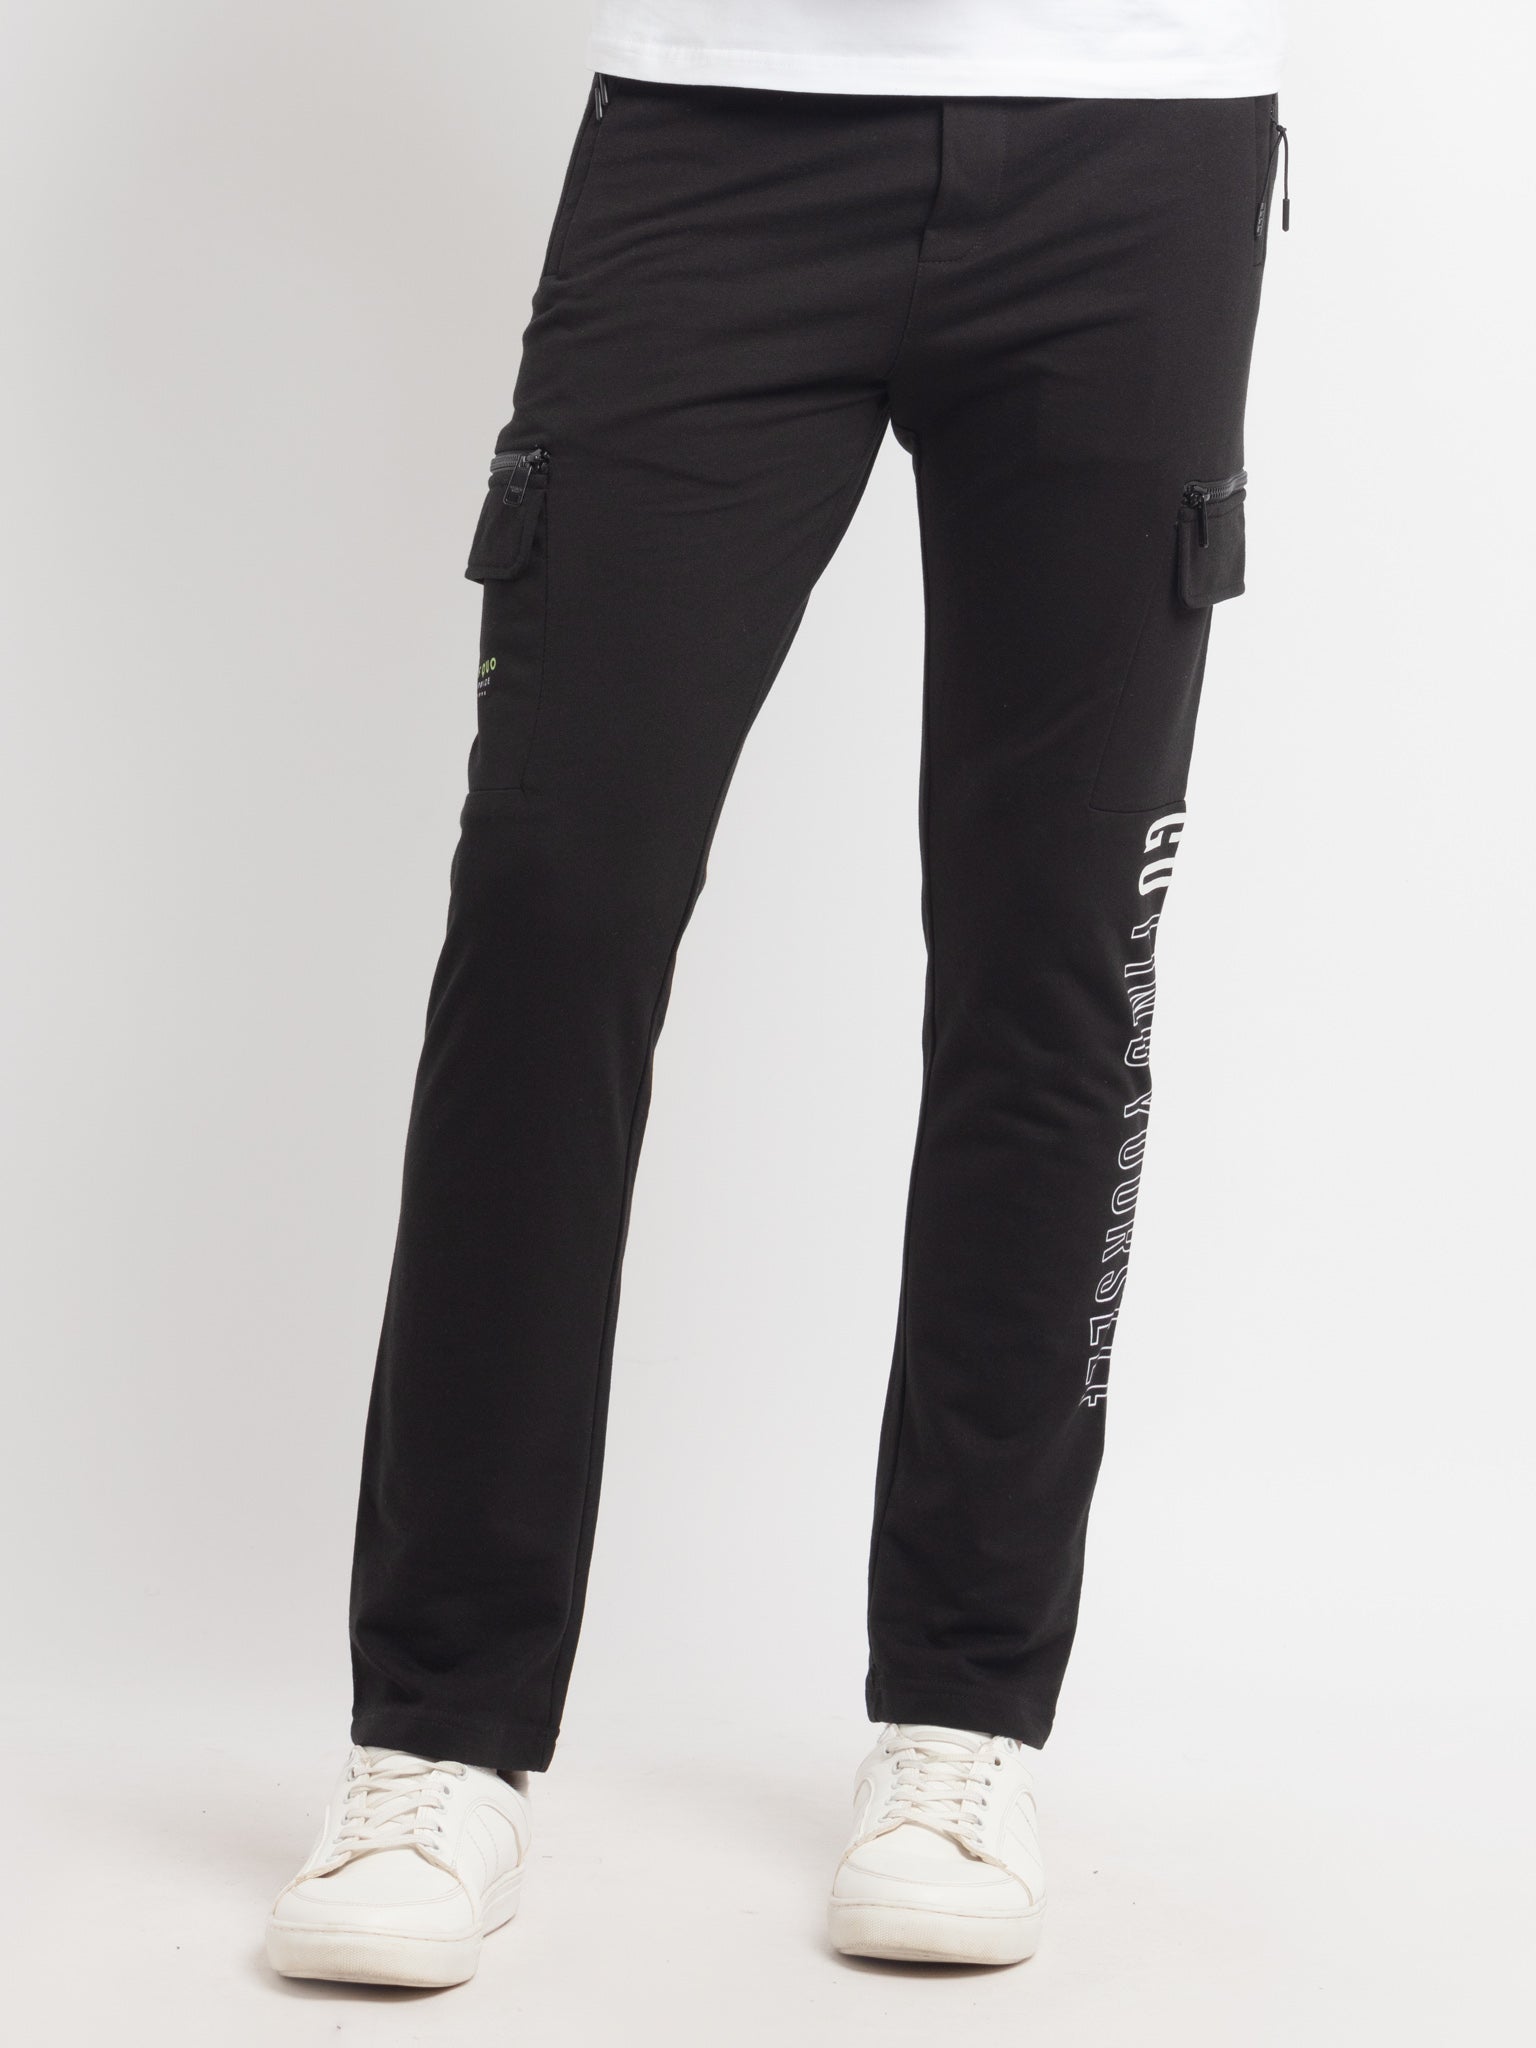 Status Quo |Printed Regular Fit Track Pants - S, M, L, XL, XXL